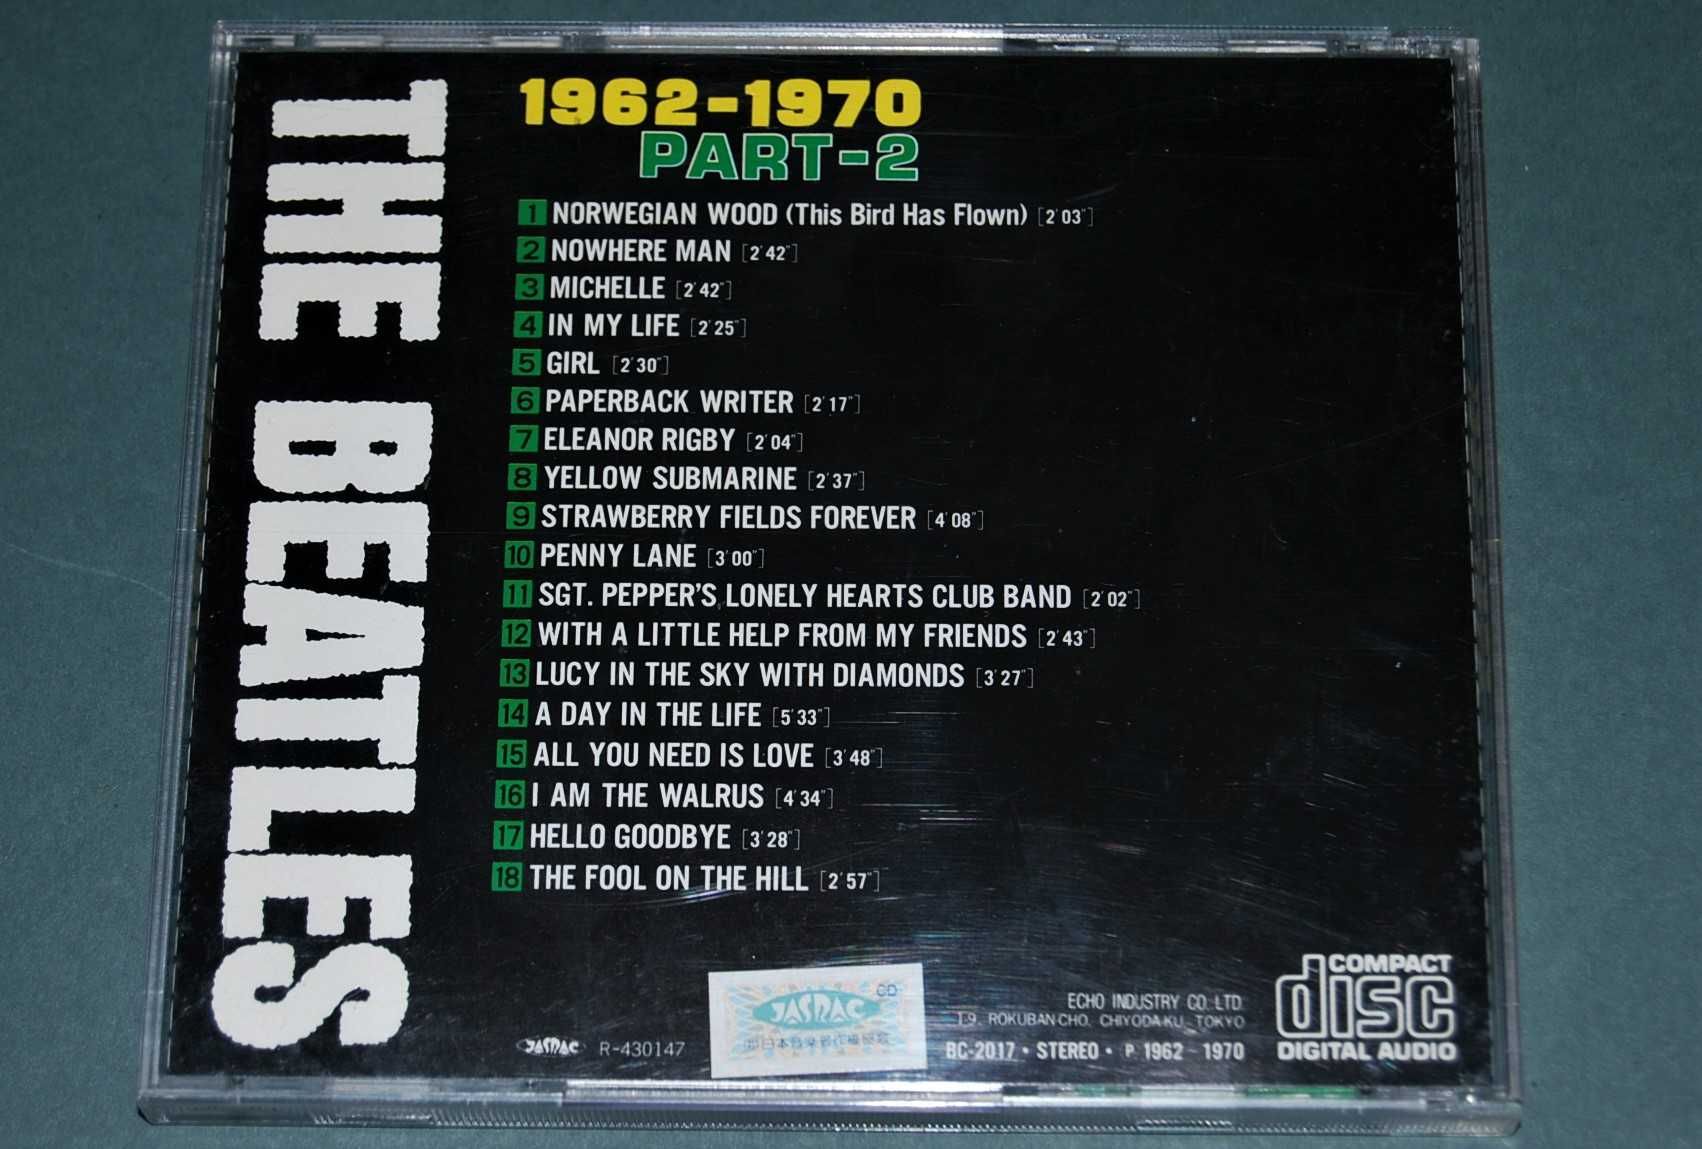 The Beatles 1962 - 1970 Part 2 CD